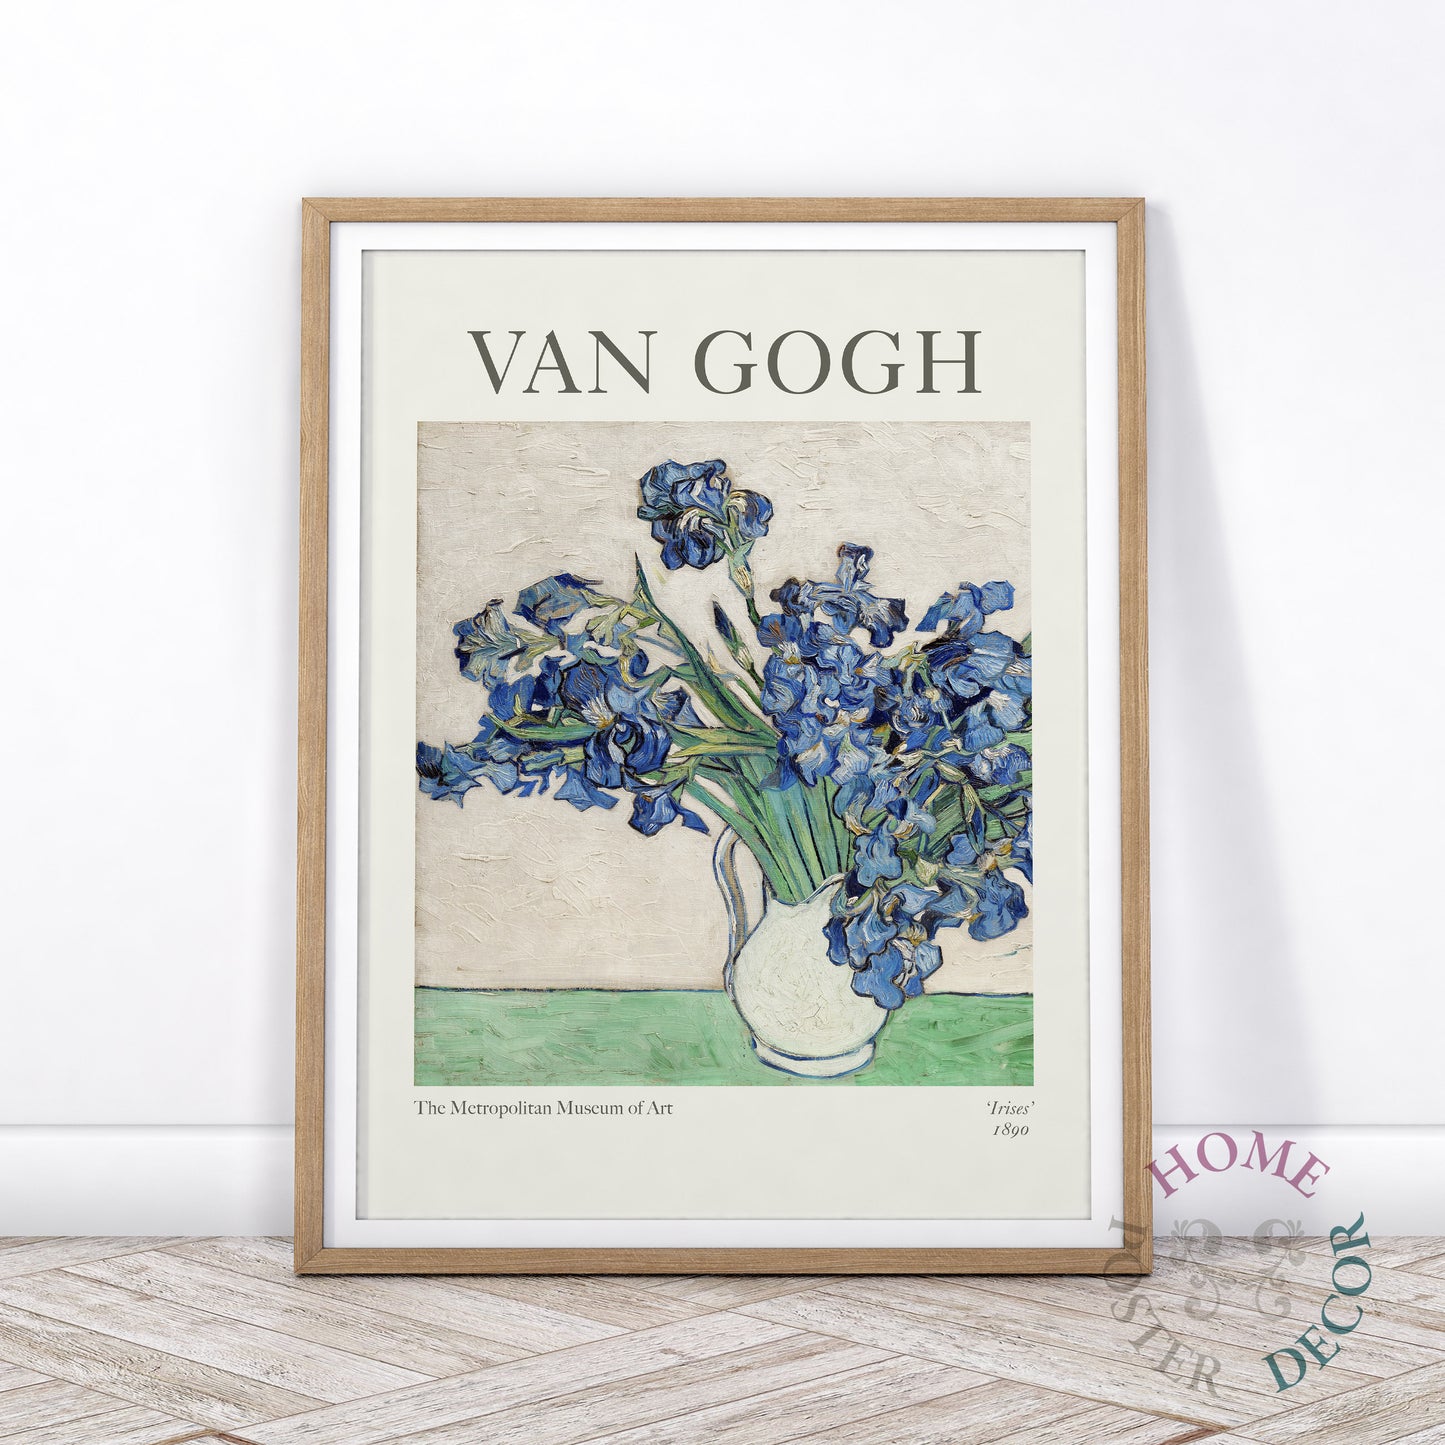 Van Gogh Poster, Irises in a White Vase